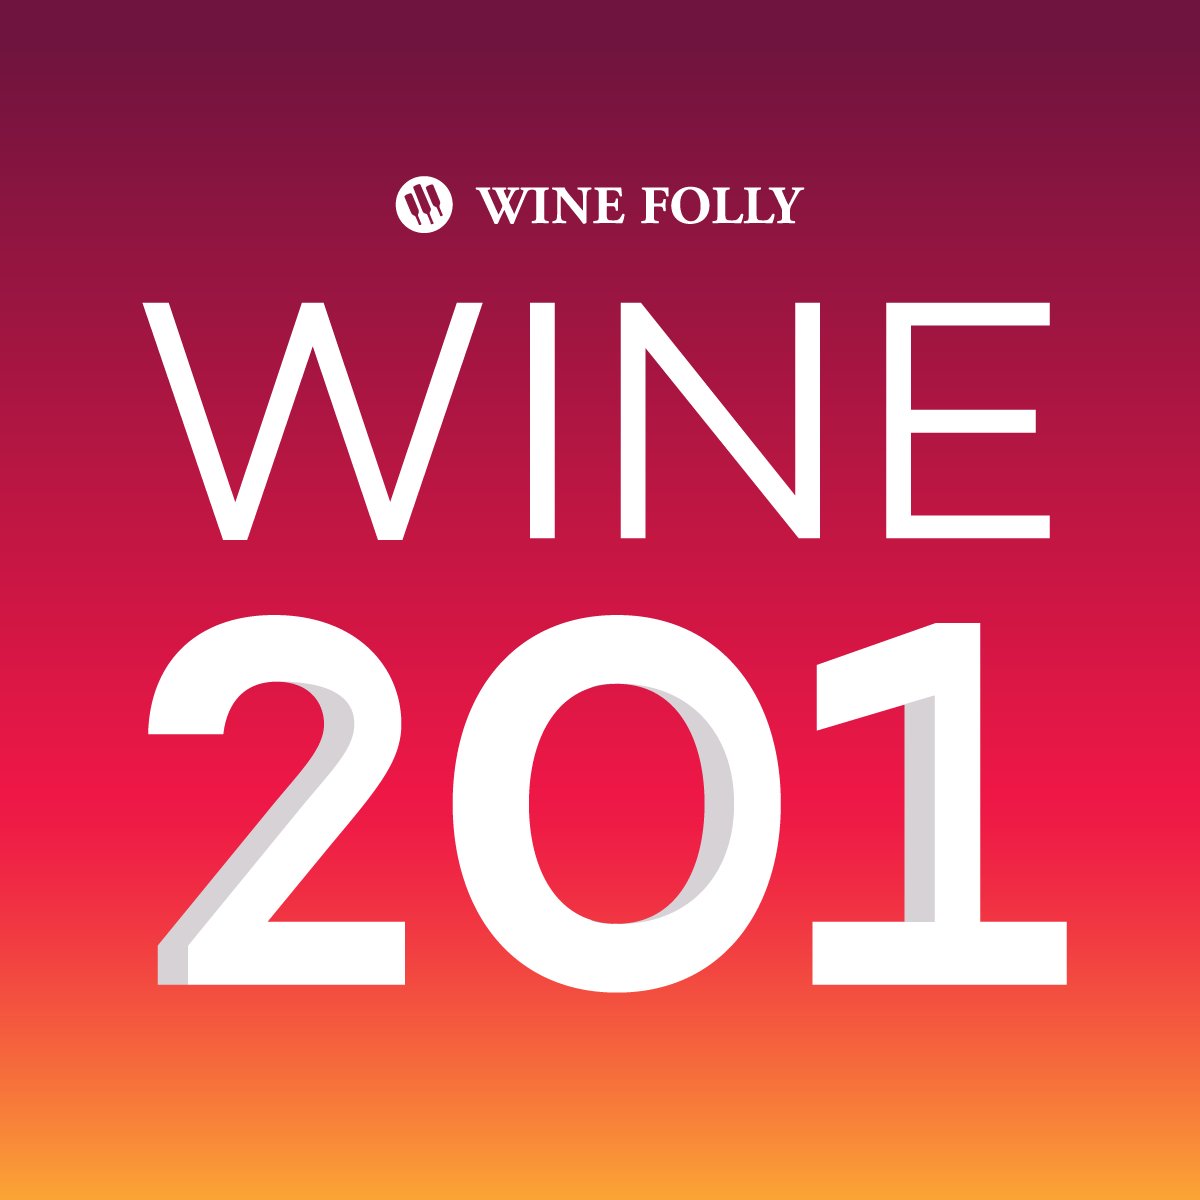 Wine Folly Wine 201